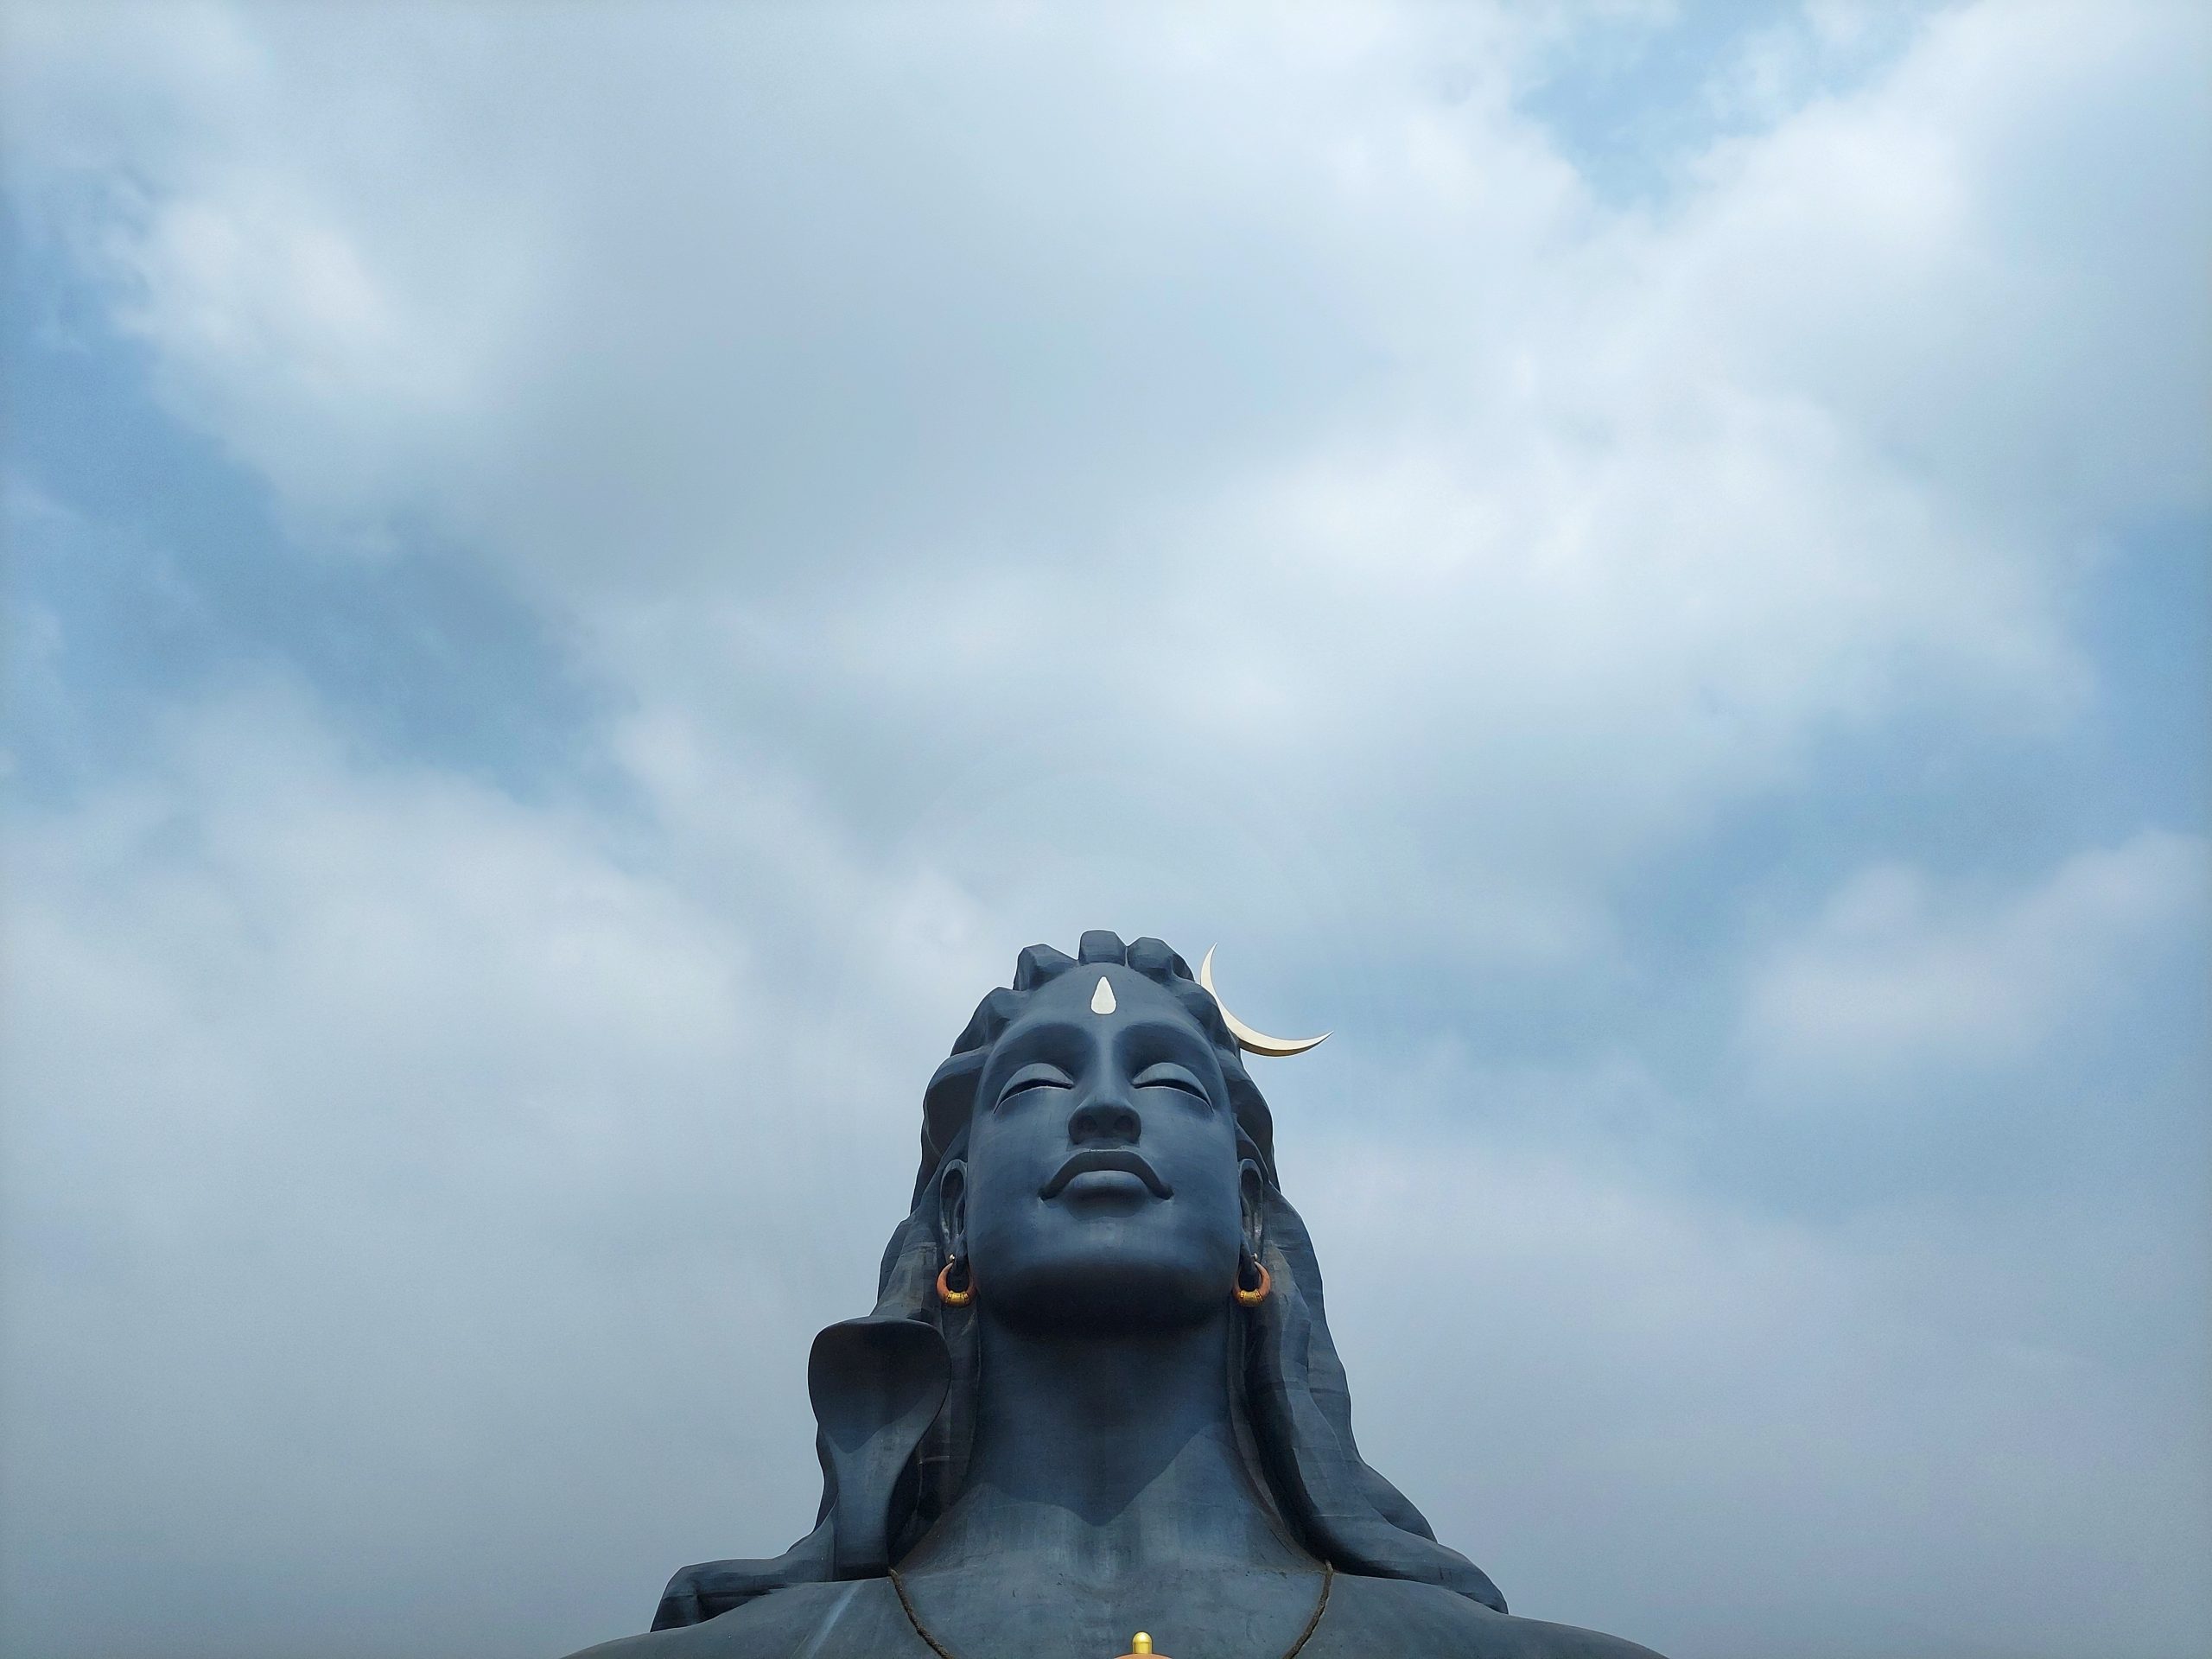 Lord Shiva statue Coimbatore